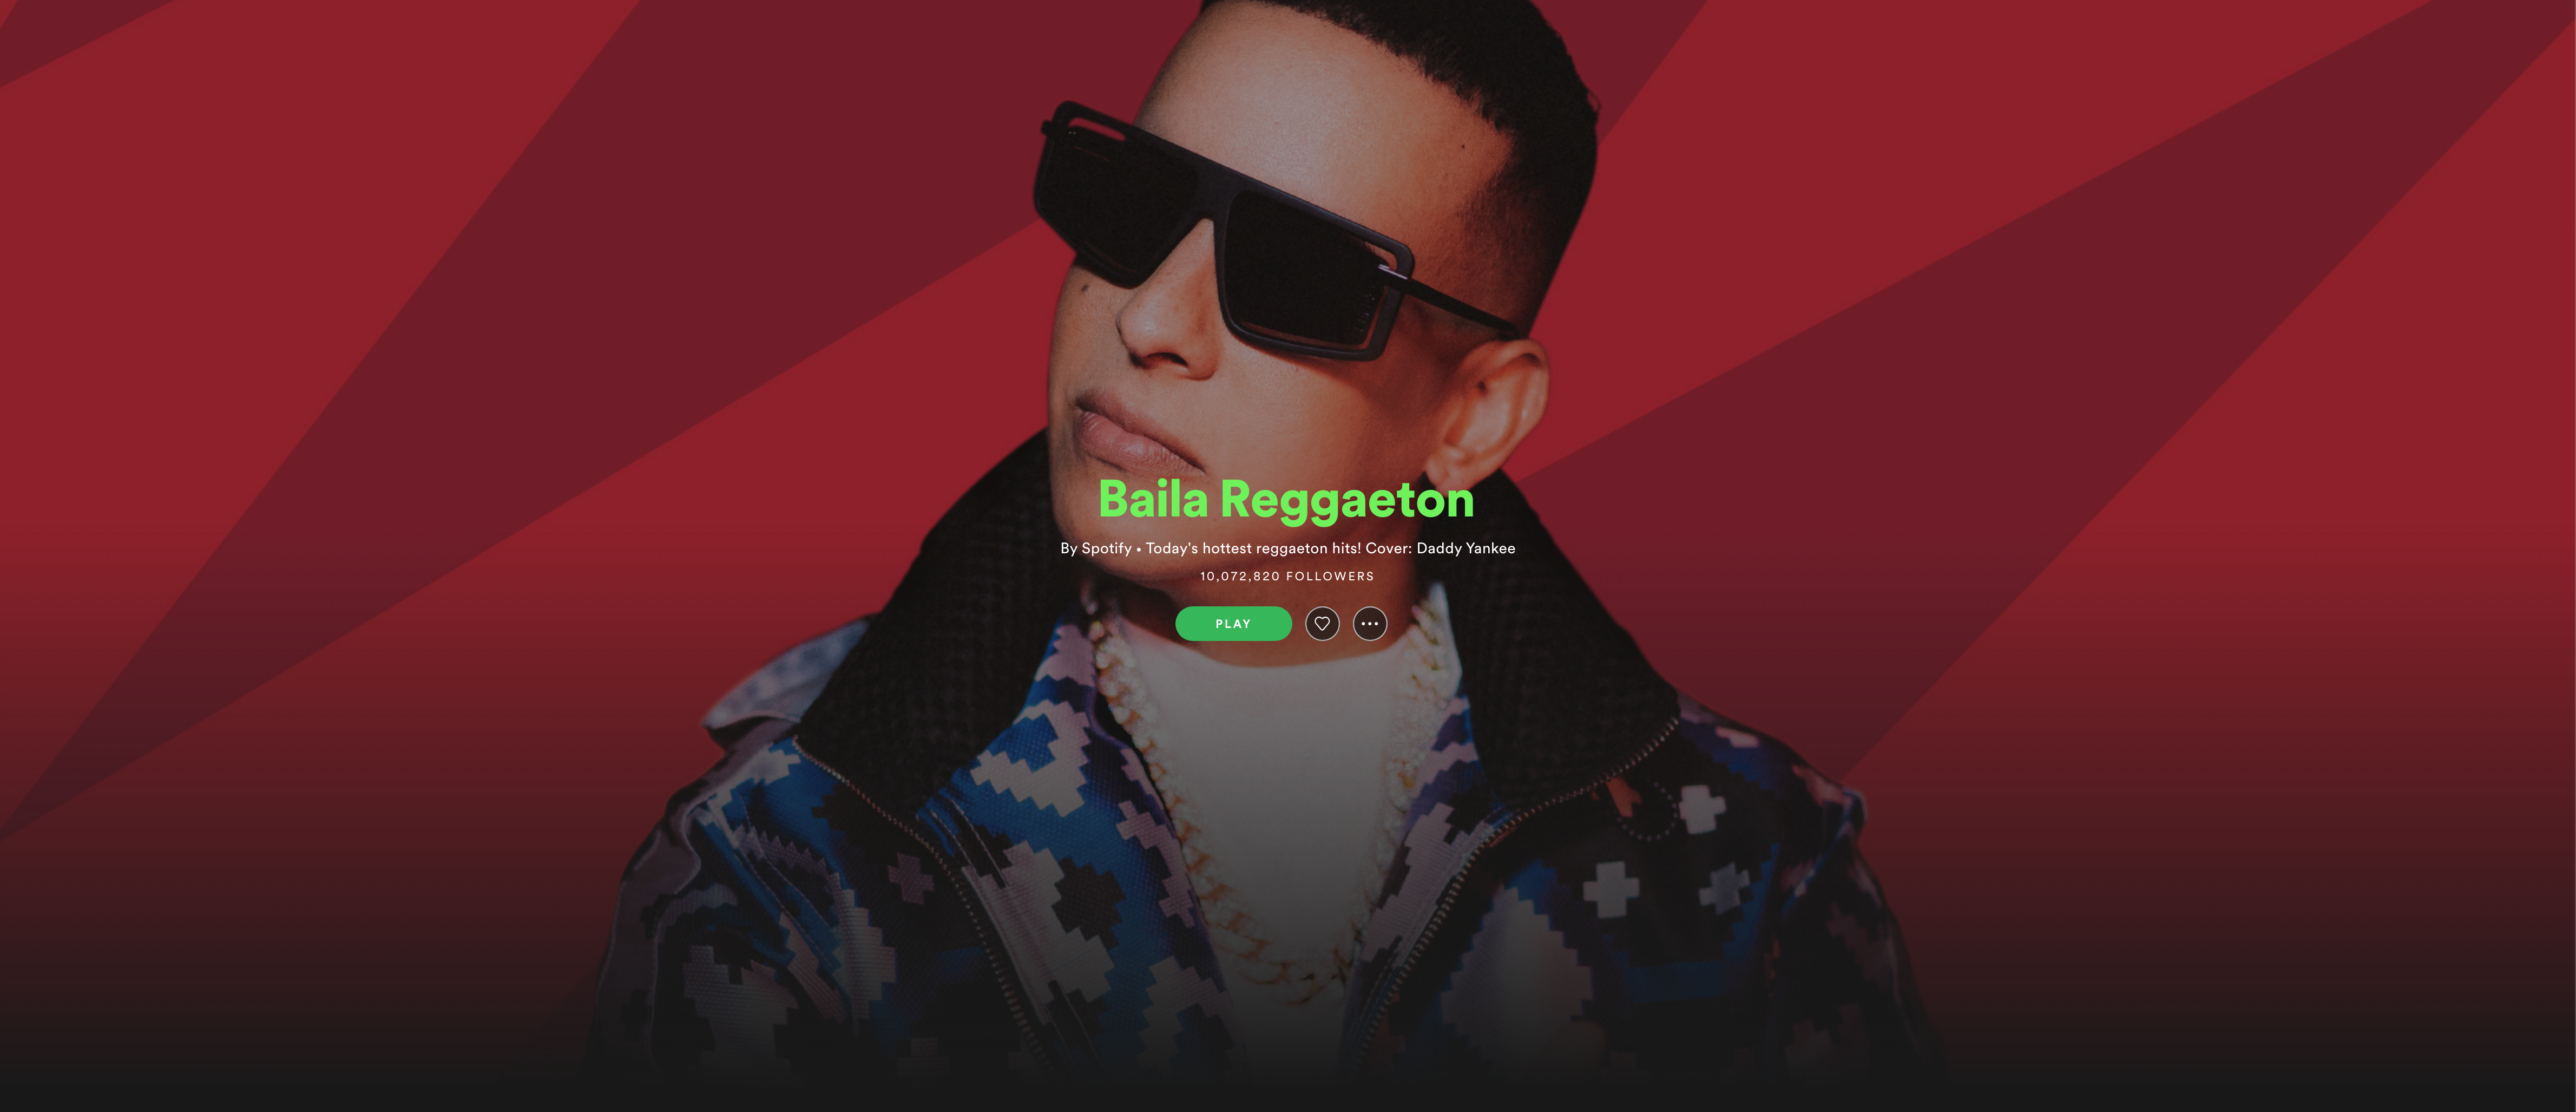 Spotify’s Baila Reggaeton playlist reaches 10 million followers